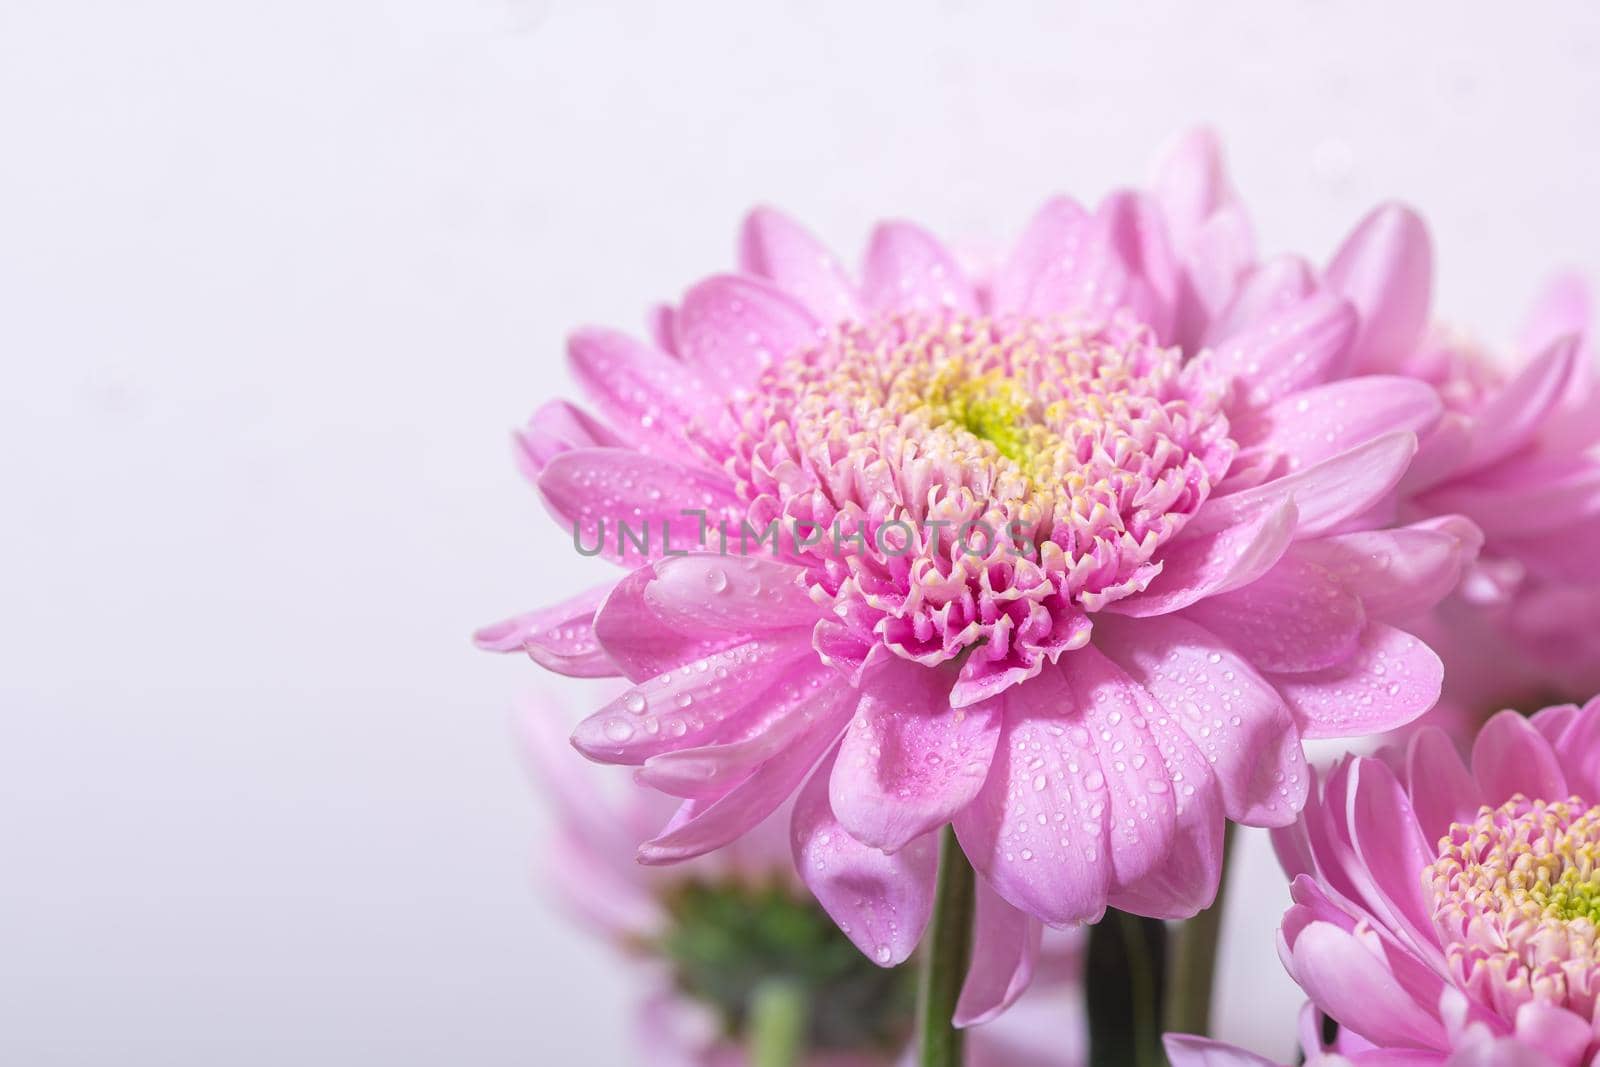 Bright pink chrysanthemum flower on white background by Estival